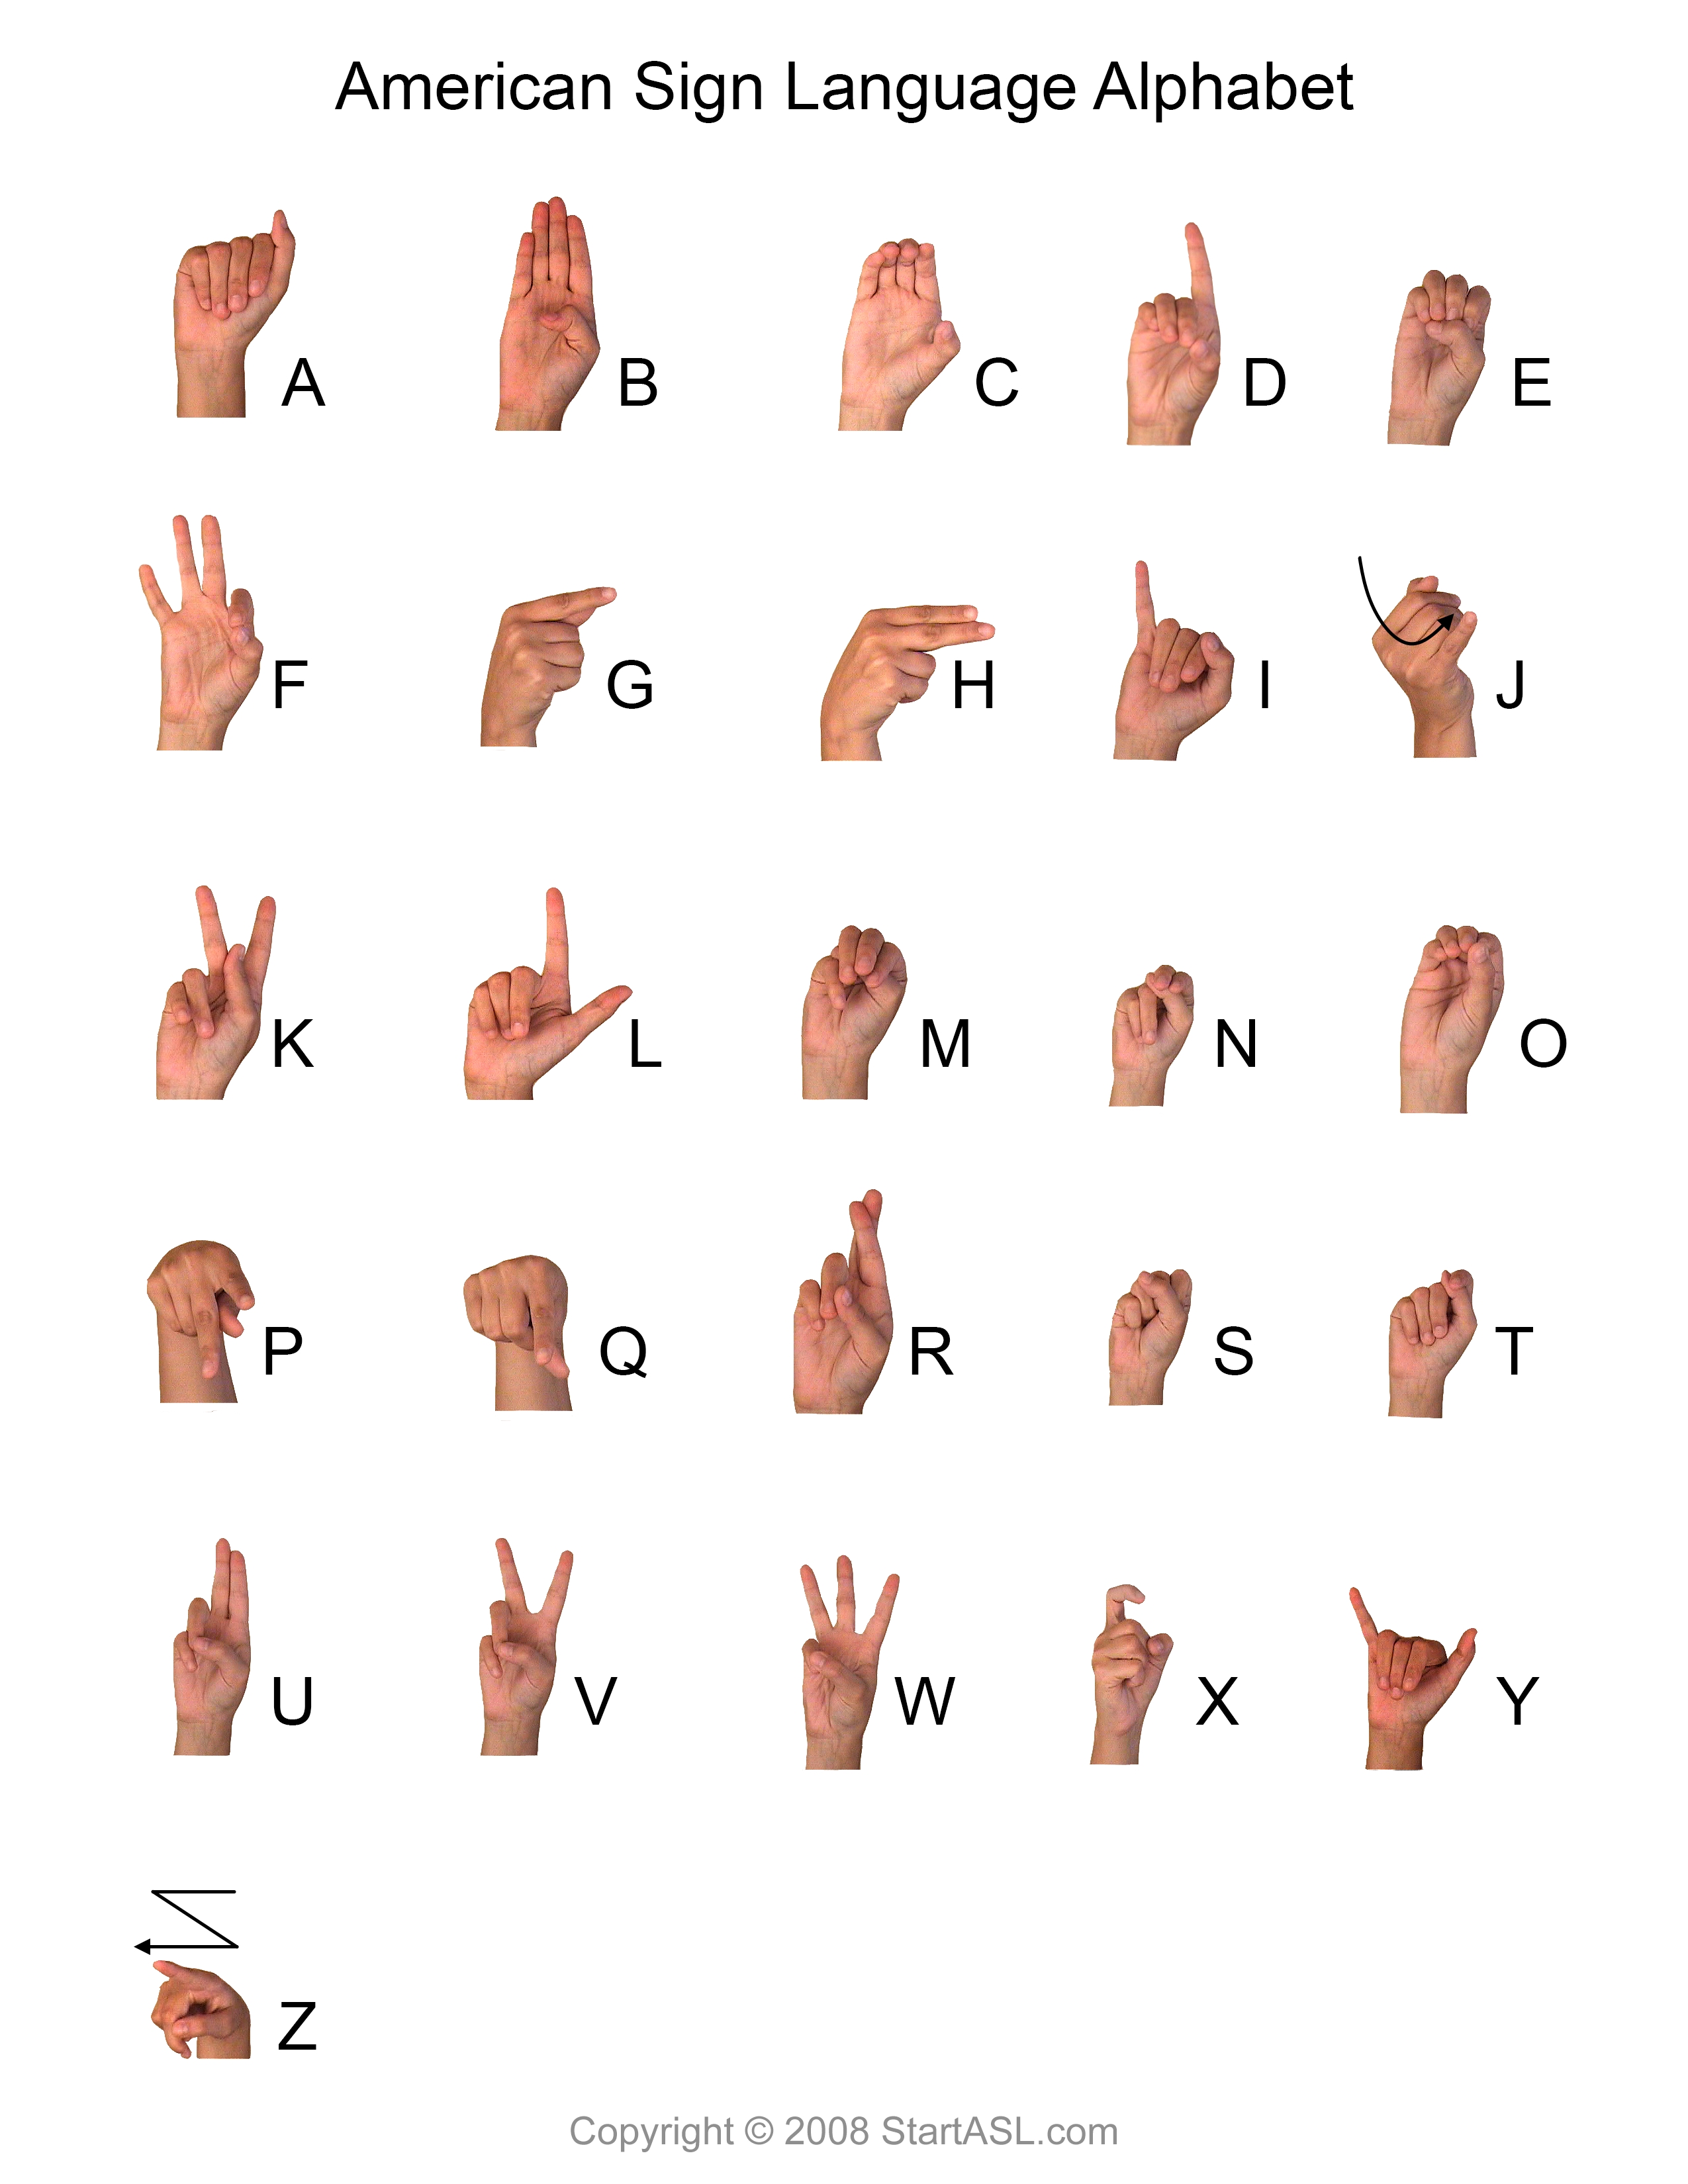 American Sign Language Alphabet – Start ASL